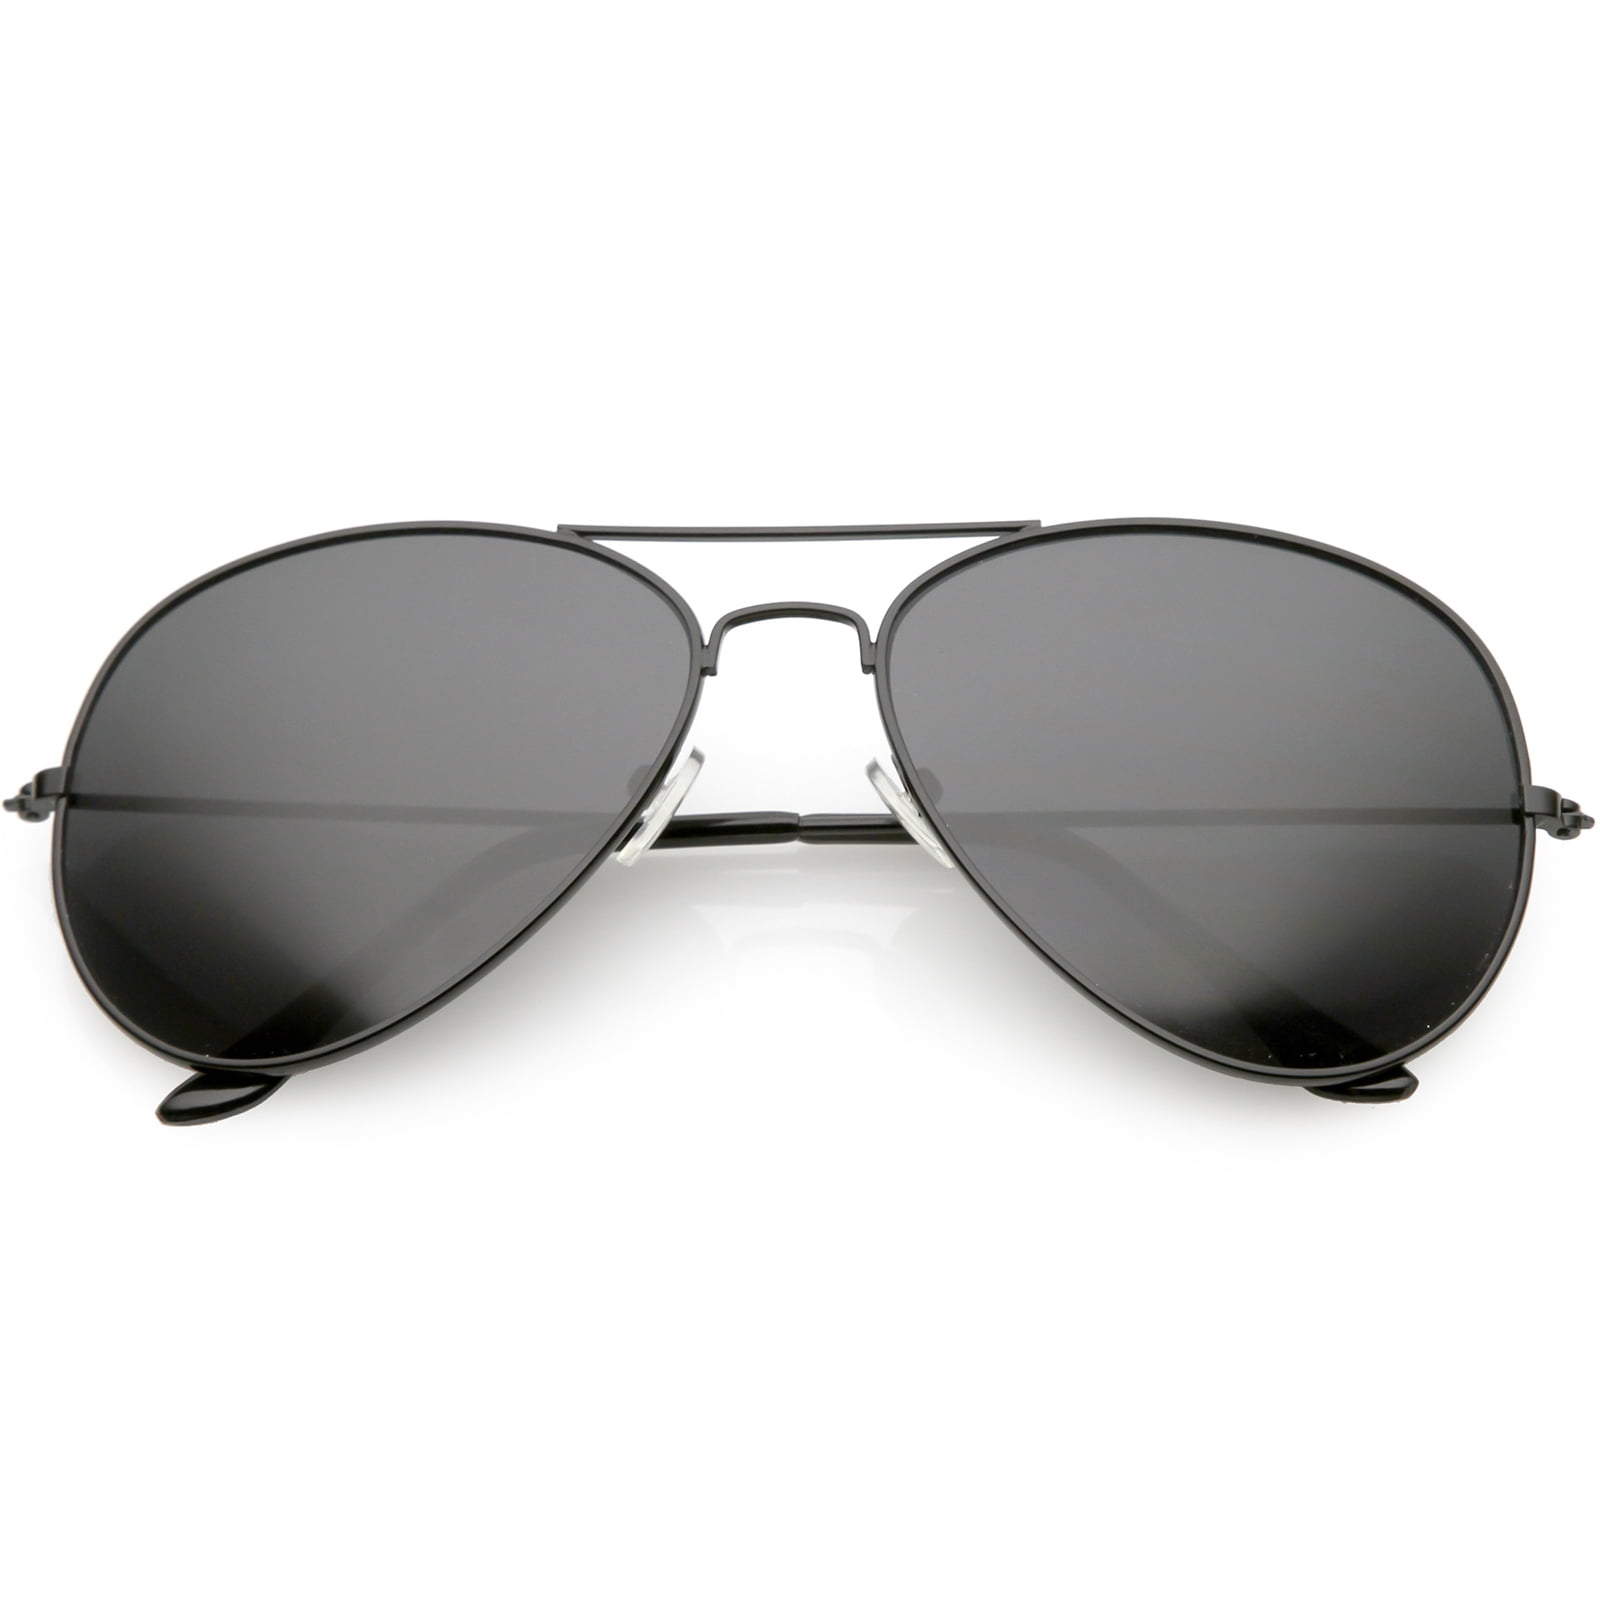 Oversize Large Aviator Sunglasses Metal Frame Crossbar Thin Arms 60mm ...